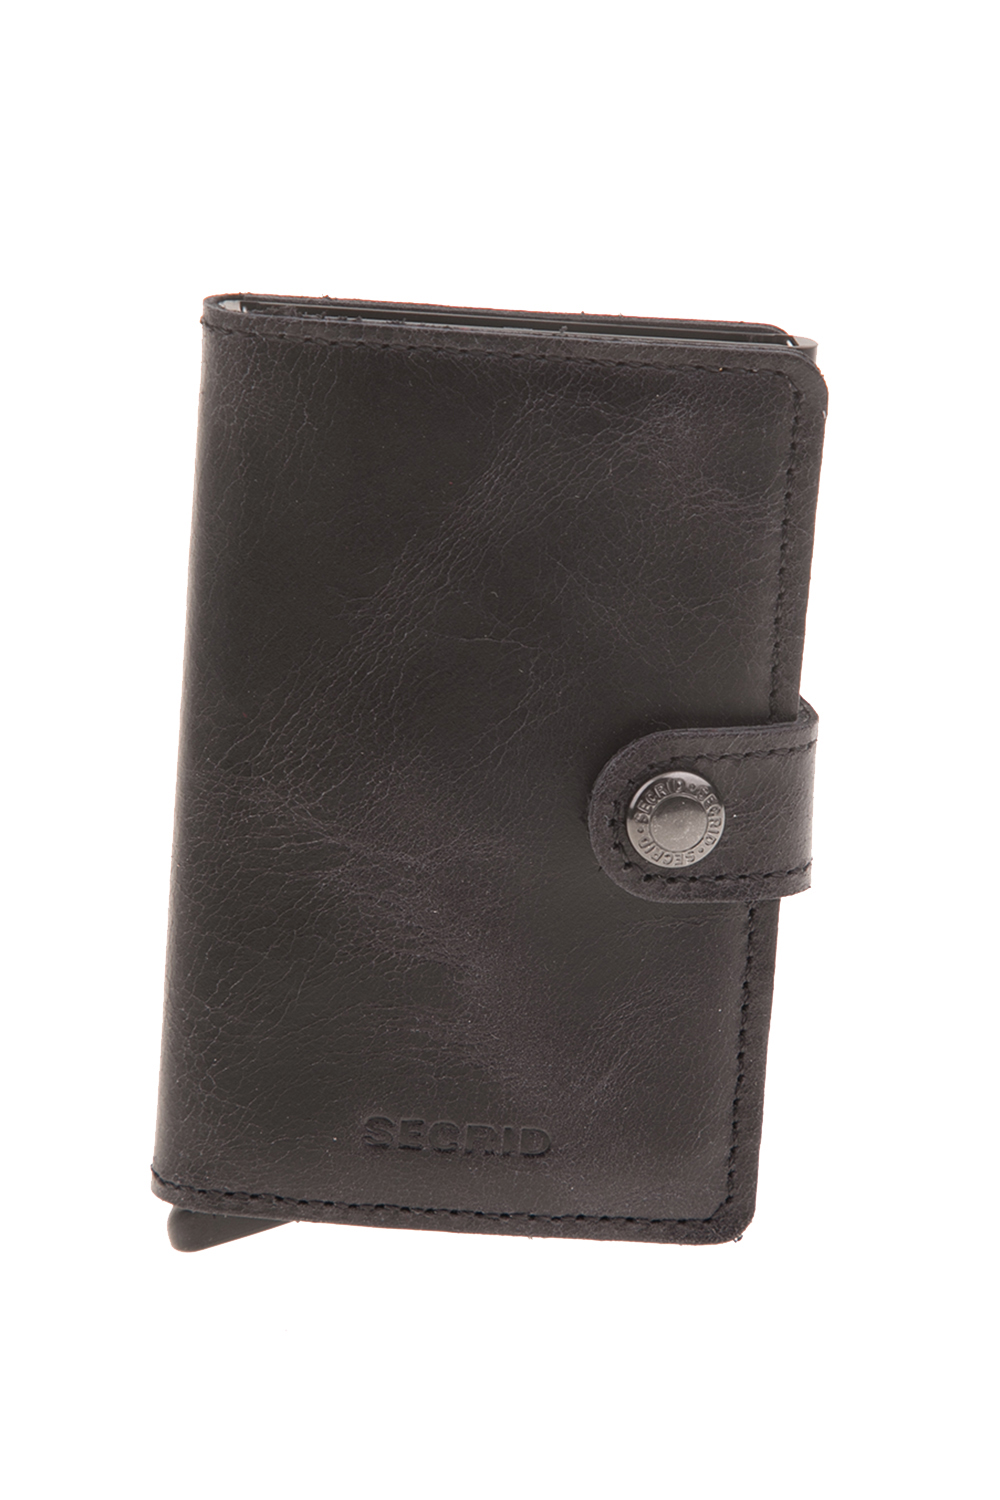 SECRID – Unisex πορτοφόλι SECRID Miniwallet Vintage μαύρο 1688724.0-0071